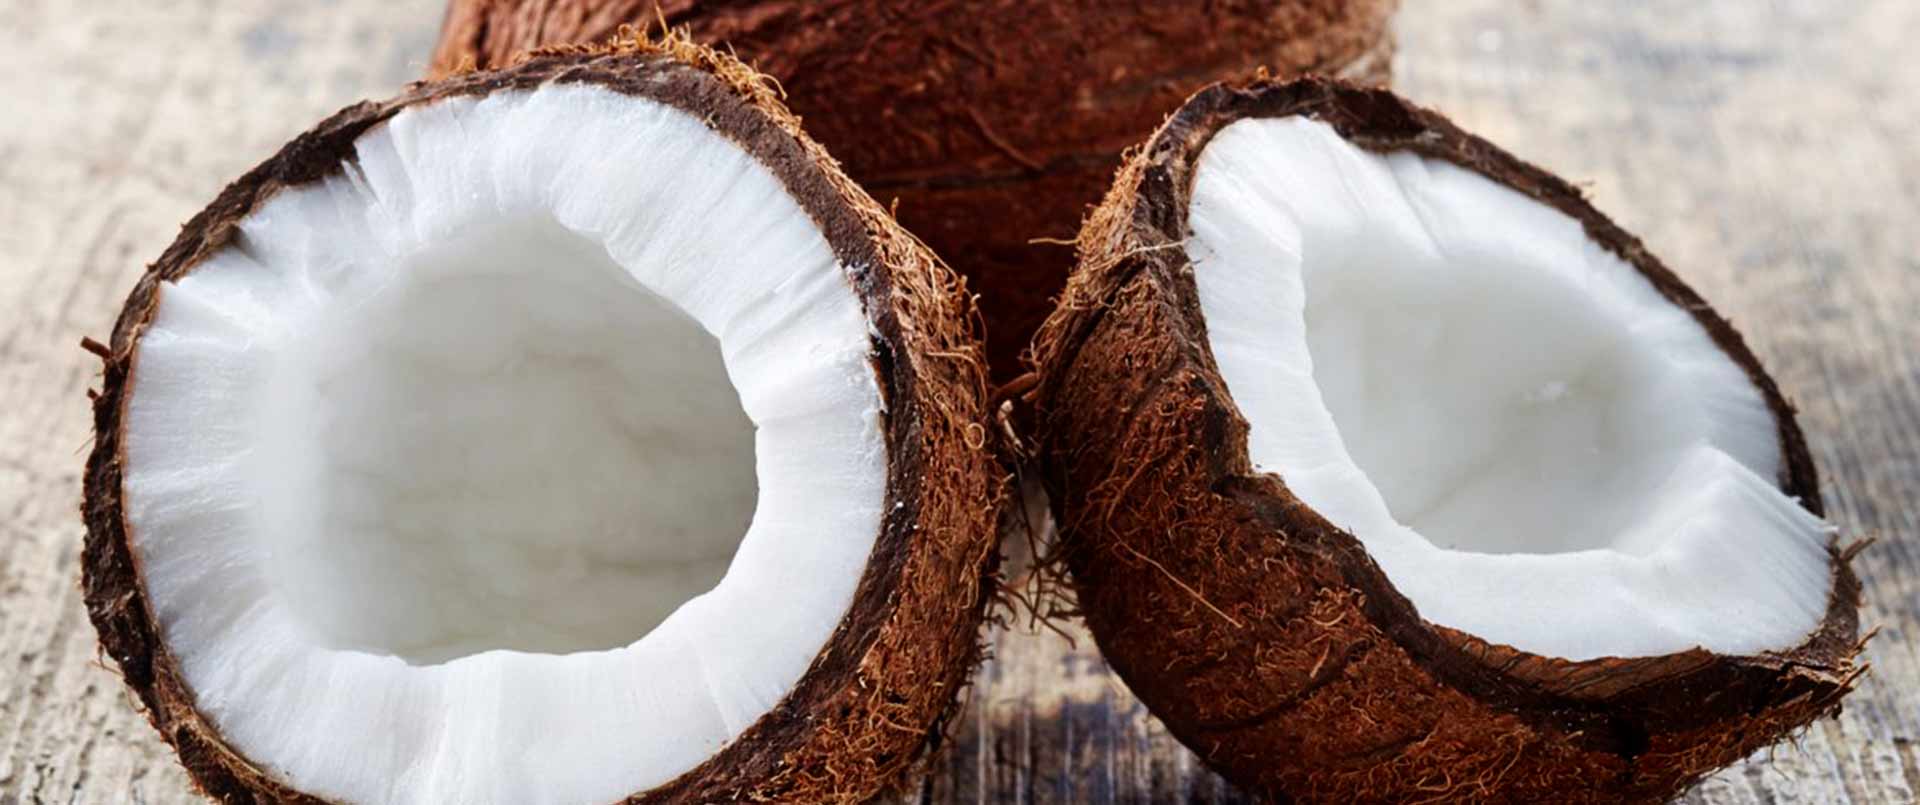 Kerala-coconut-exporters